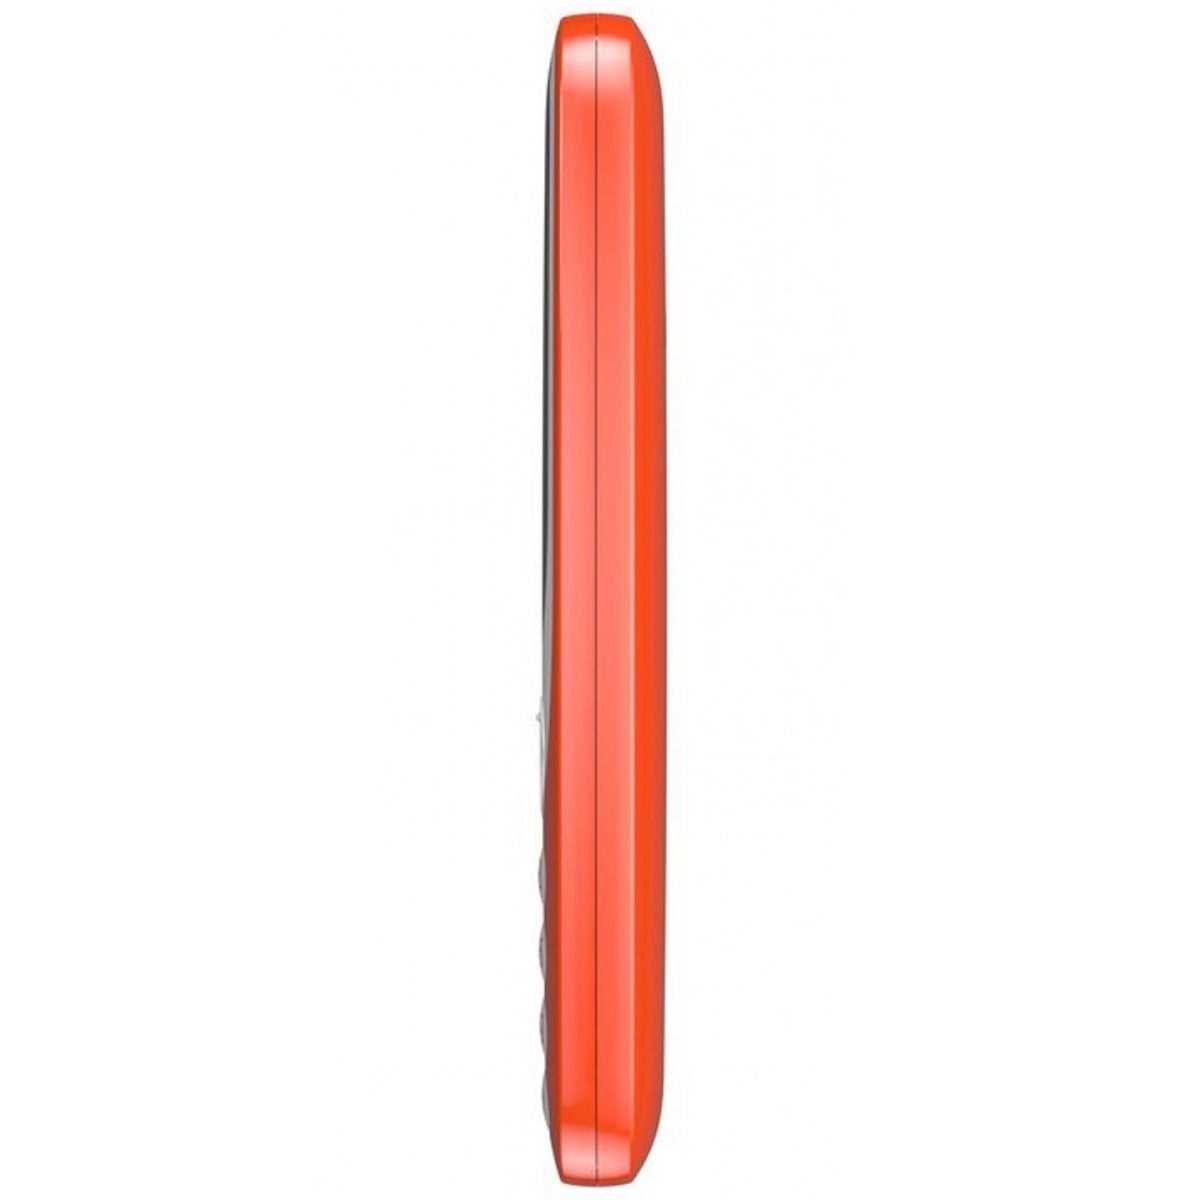 Telefon mobil Nokia 3310, Warm Red, Single SIM